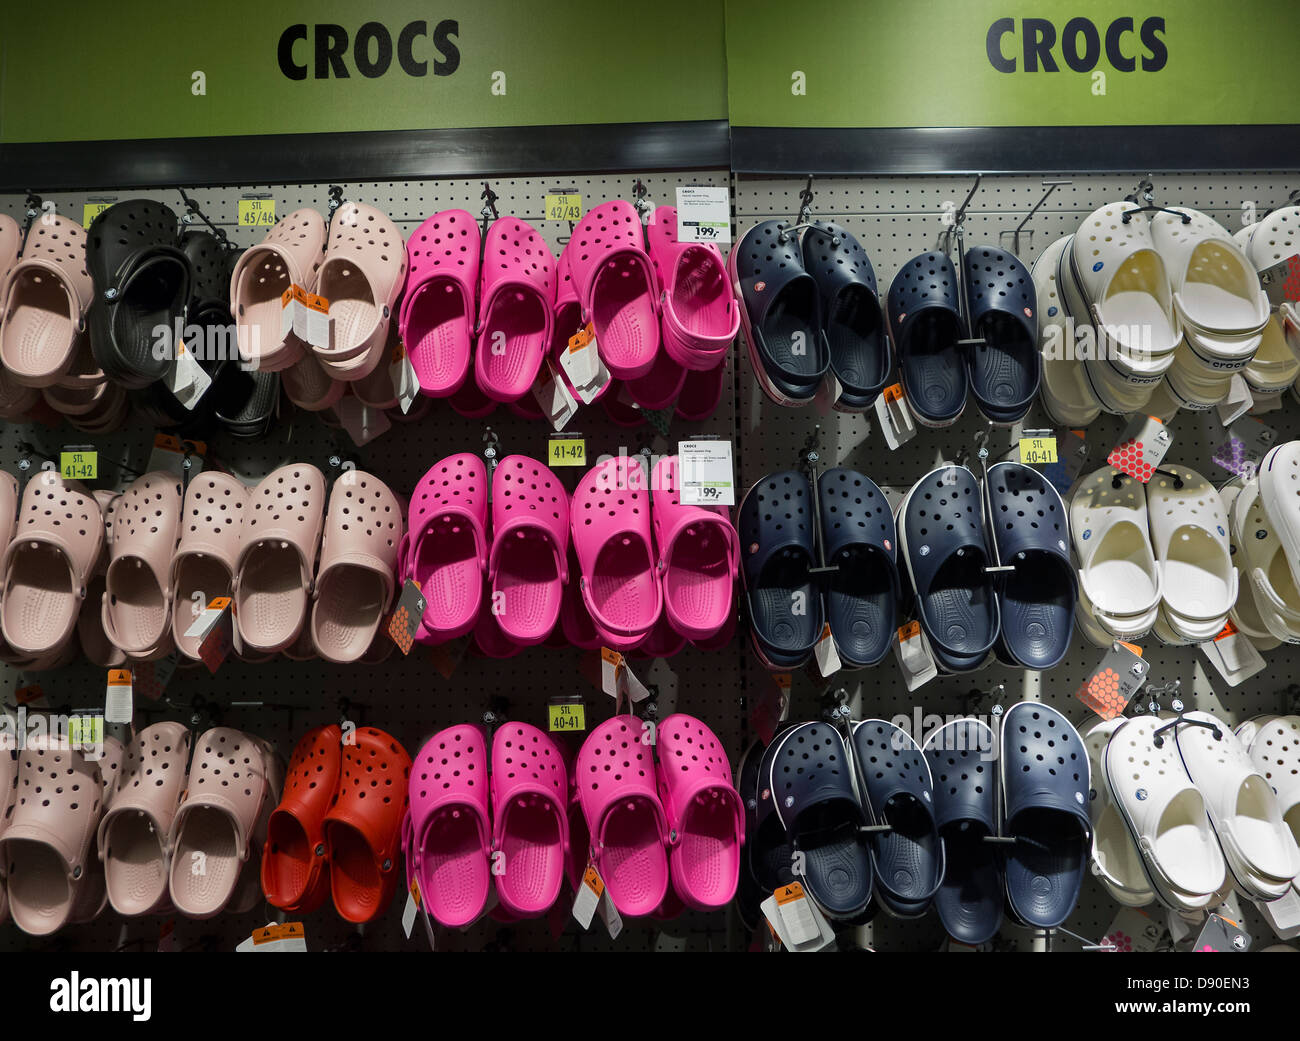 crocs shoe store